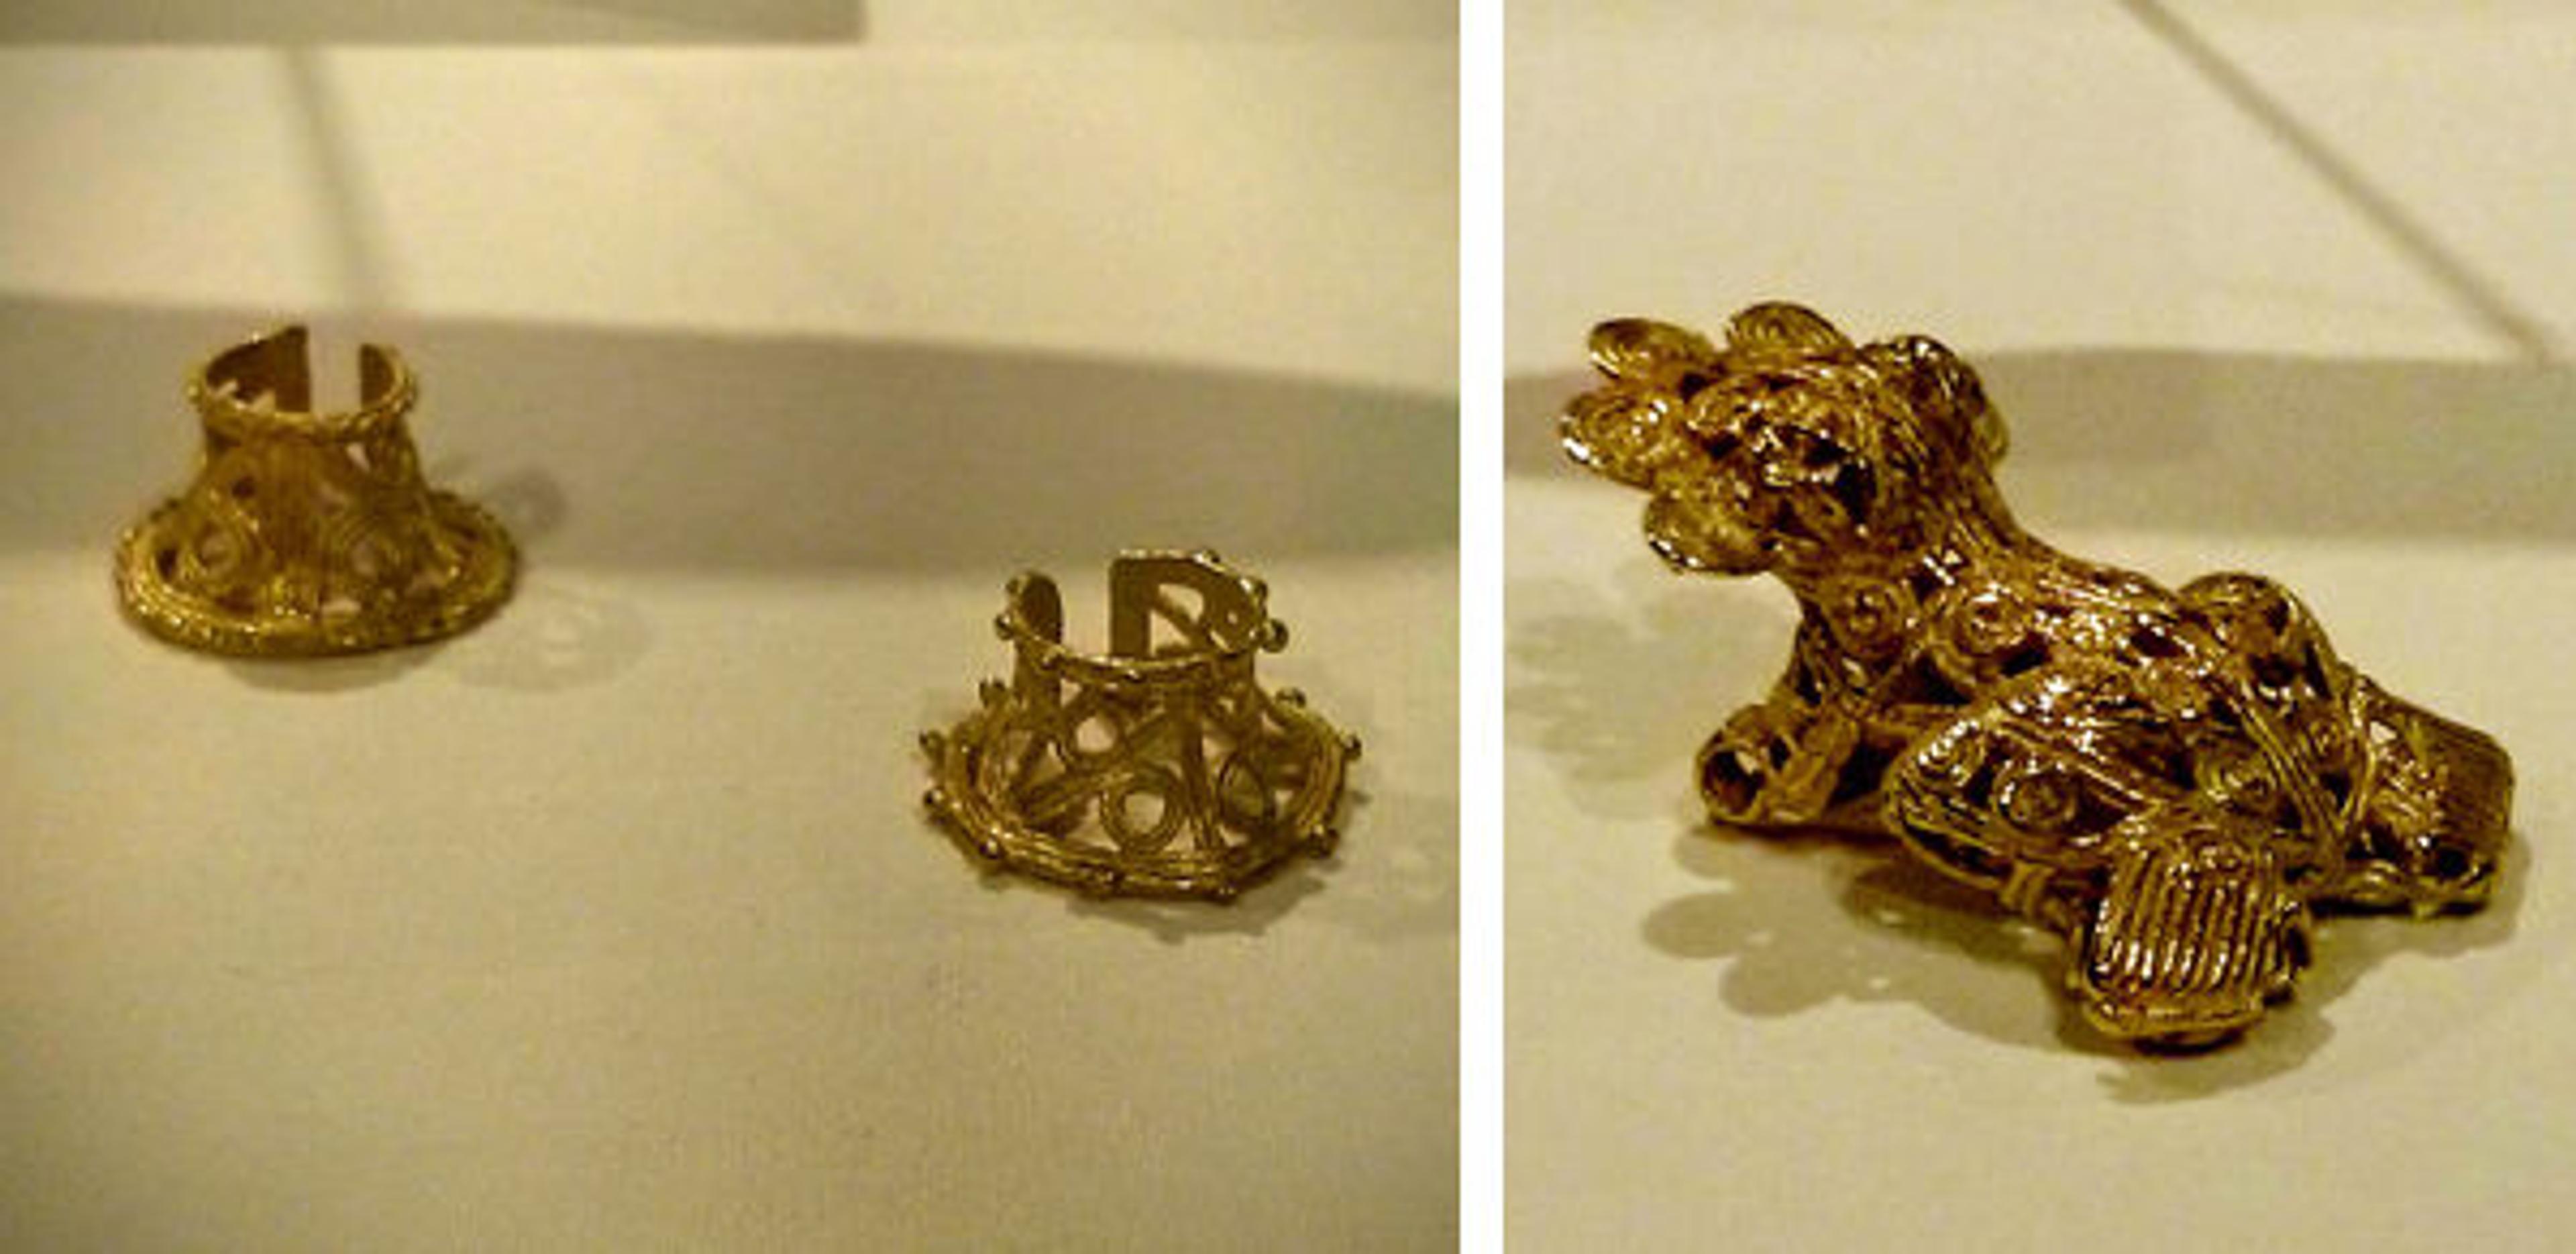 Left: Fig. 5a. Nose ornaments, 5th–8th century. Venado Beach, Panama. Gold (cast); left H. 5/8 x Diam. 1 in. (1.6 x 2.5 cm); right H. 1/2 x Diam. 1 in. (1.3 x 2.5 cm). The Metropolitan Museum of Art, New York, The Michael C. Rockefeller Memorial Collection, Bequest of Nelson A. Rockefeller, 1979 (1979.206.1353 [left], 1979.206.1352 [right]). Right: Fig. 5b. Frog pendant, 5th–8th century. Venado Beach, Panama. Gold (cast); H. 2 1/4 x W. 1 1/2 x D. 1 1/8 in. (5.7 x 3.8 x 2.8 cm). The Metropolitan Museum of Art, New York, The Michael C. Rockefeller Memorial Collection, Bequest of Nelson A. Rockefeller, 1979 (1979.206.1351)